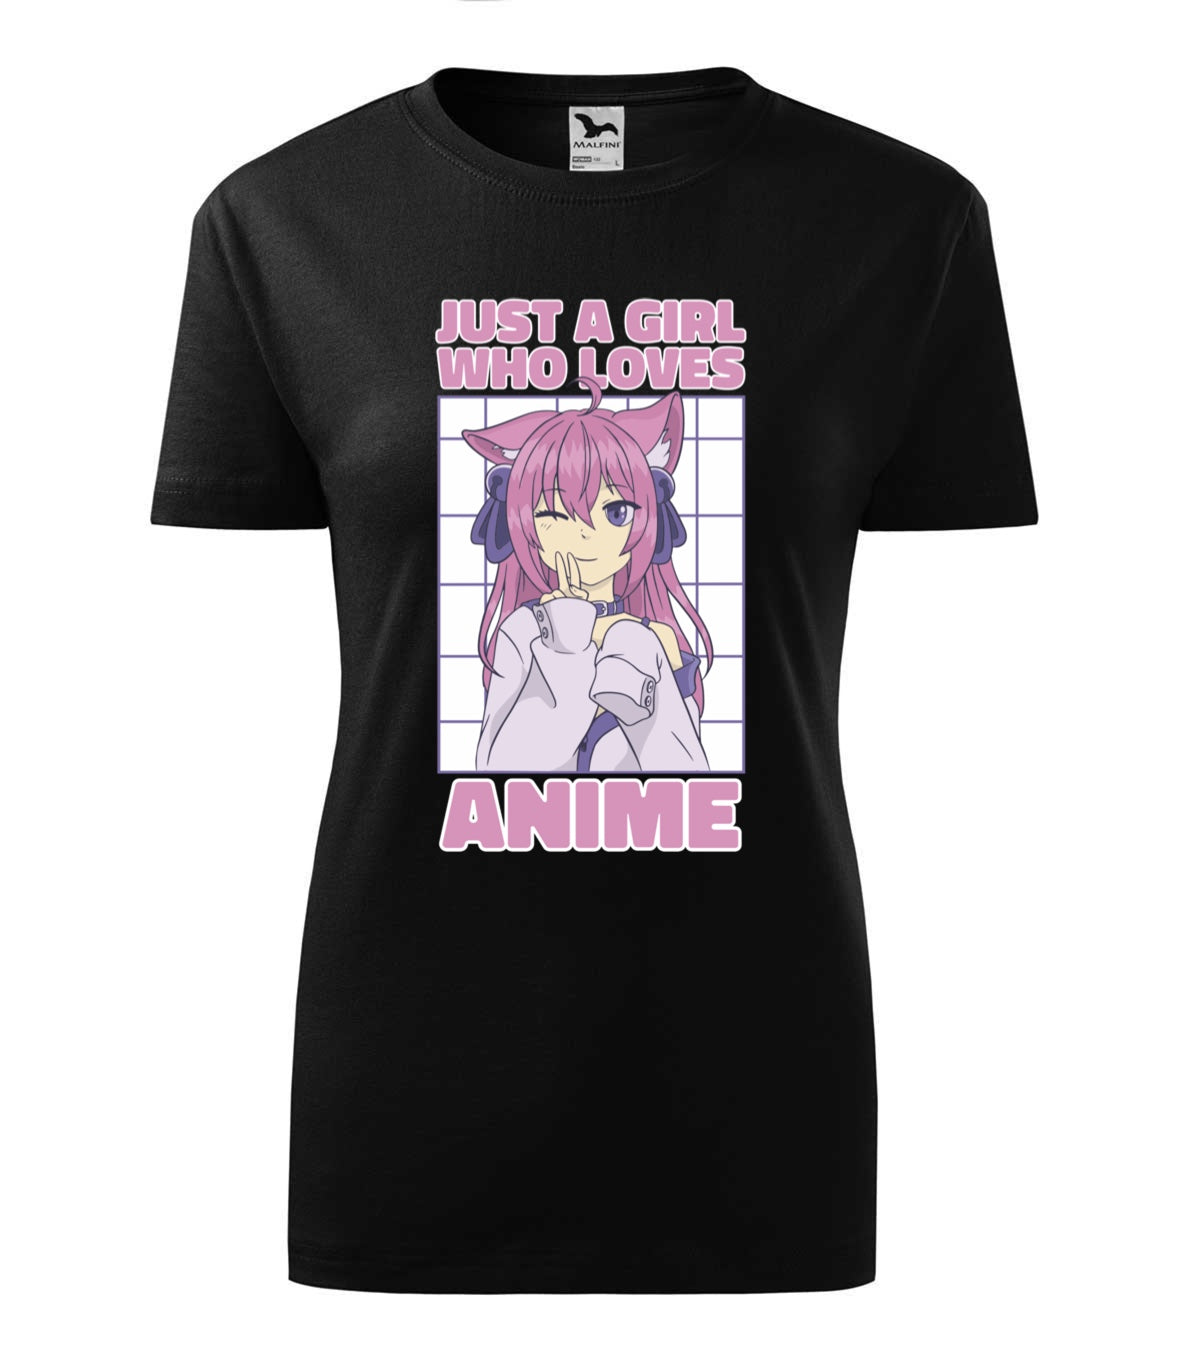 Girl Loves Anime női technikai póló